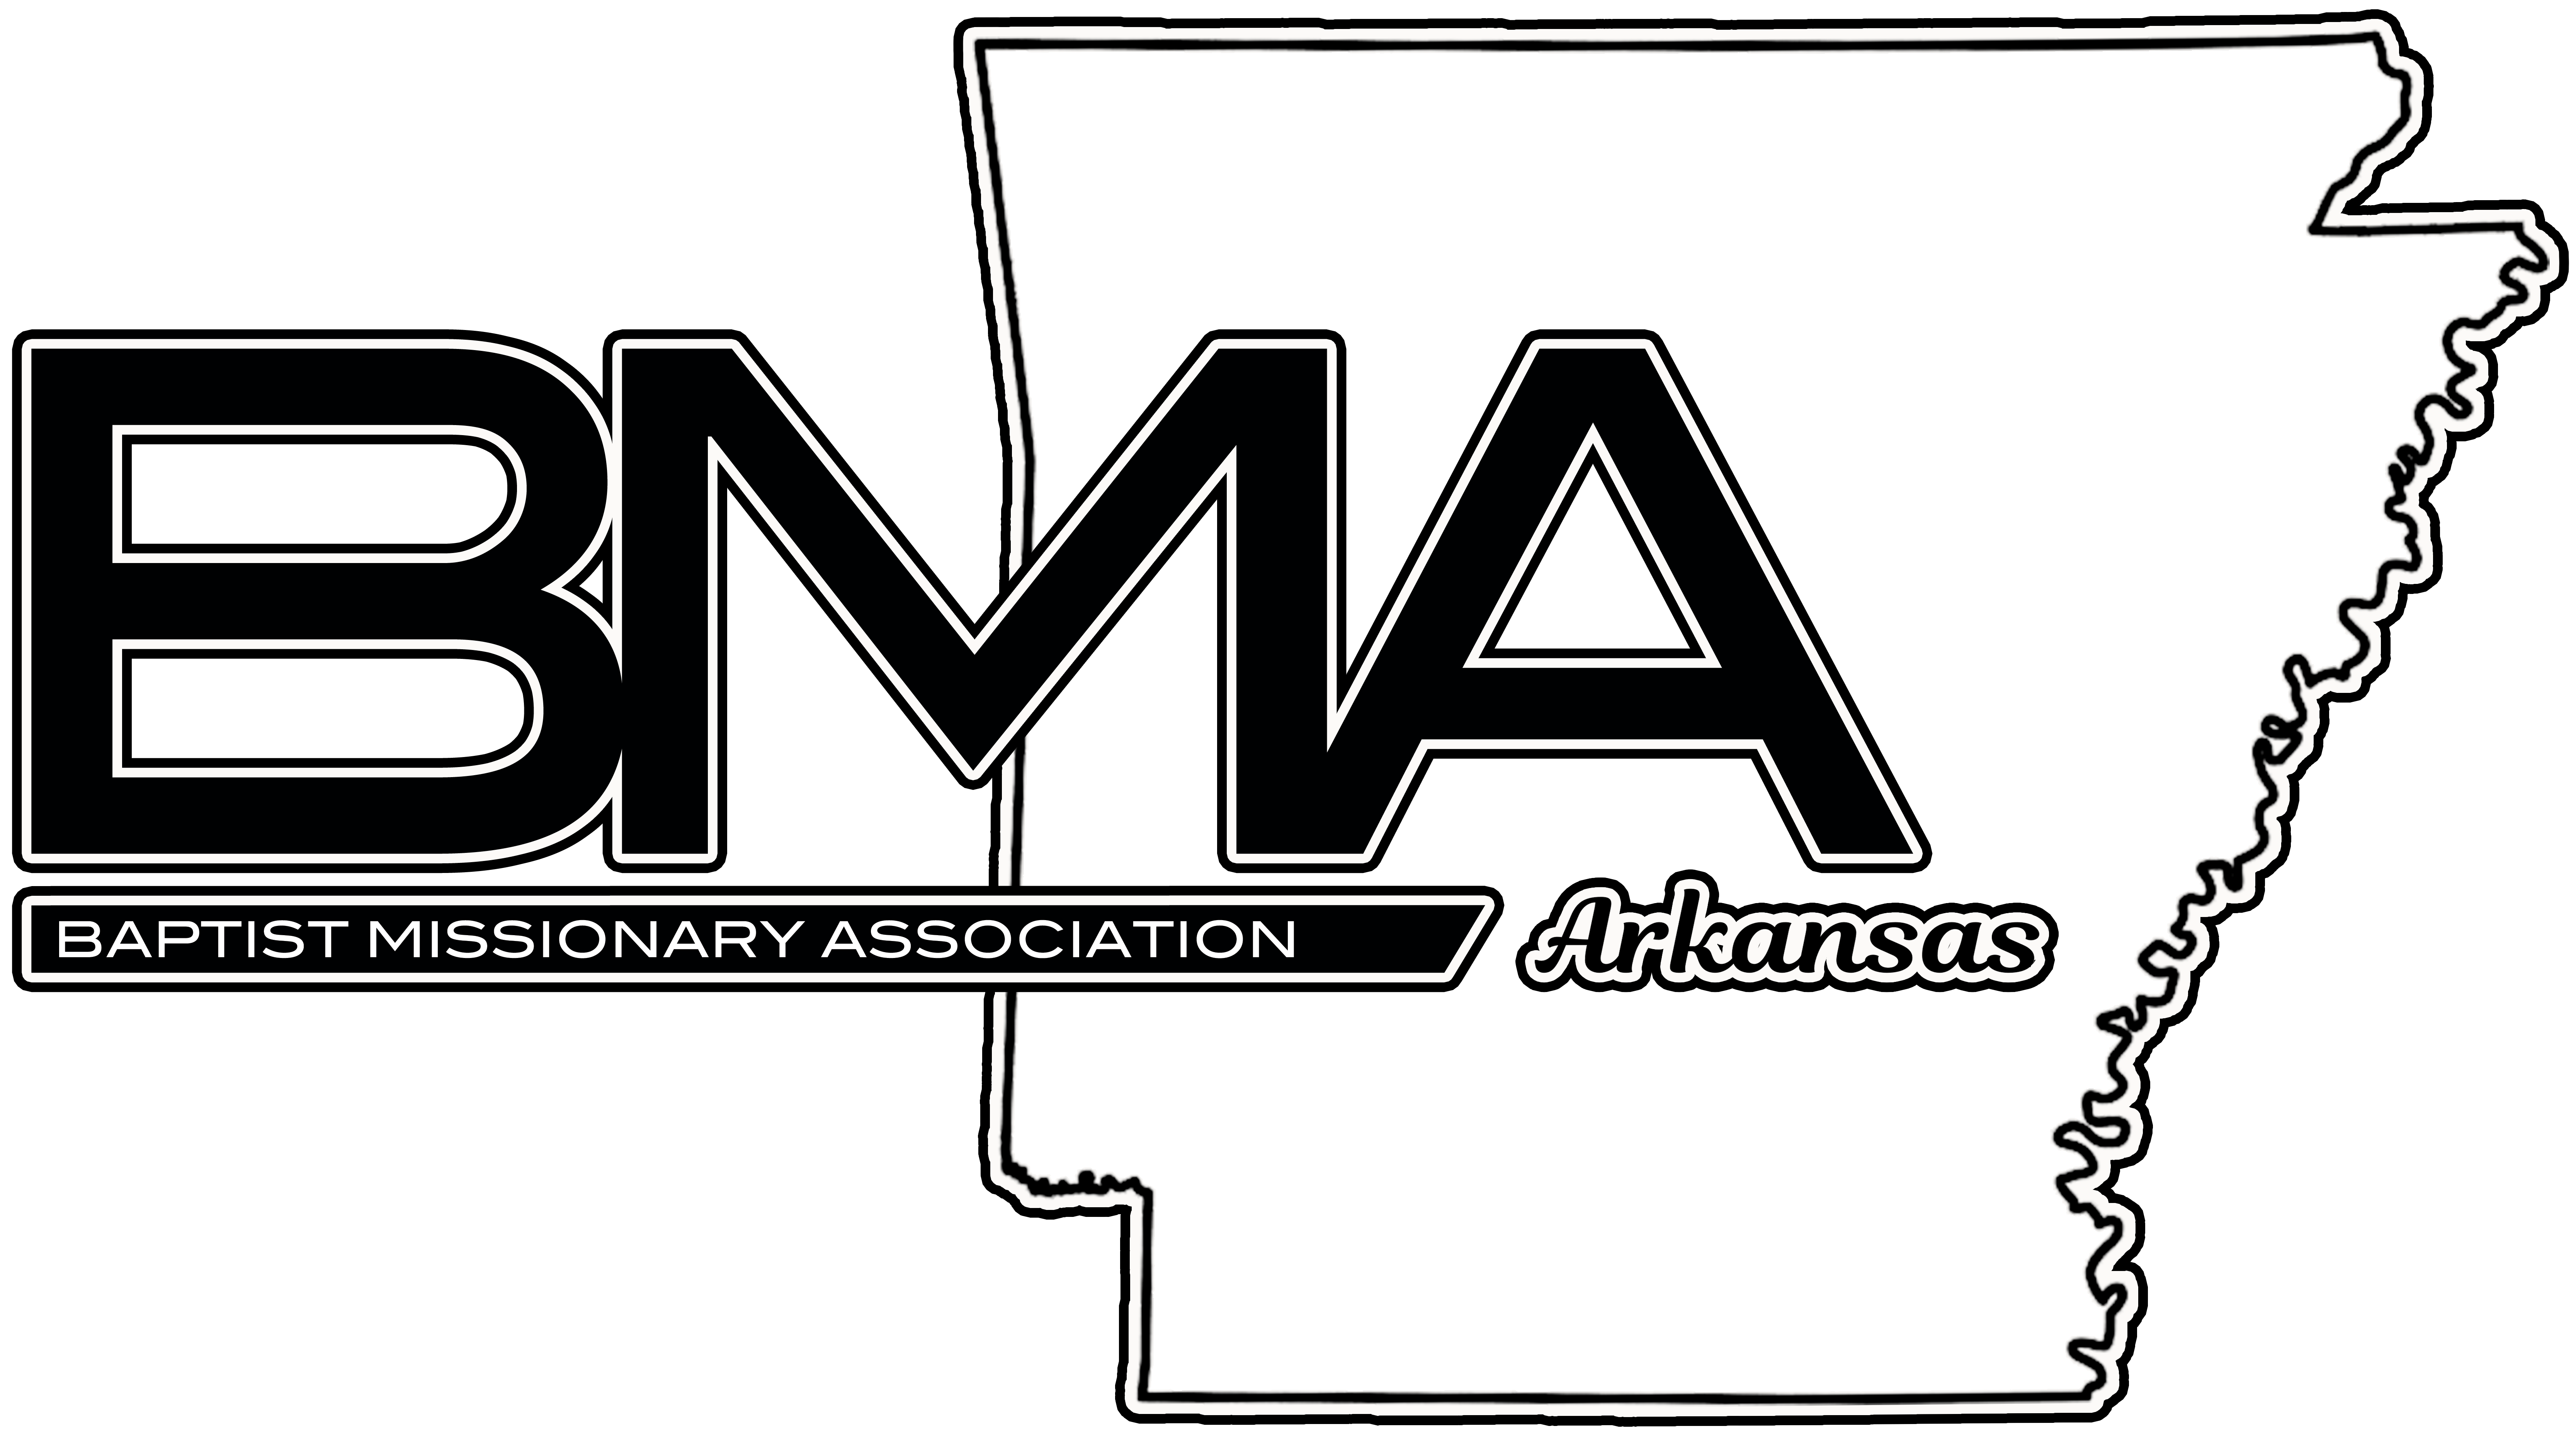 BMA of Arkansas